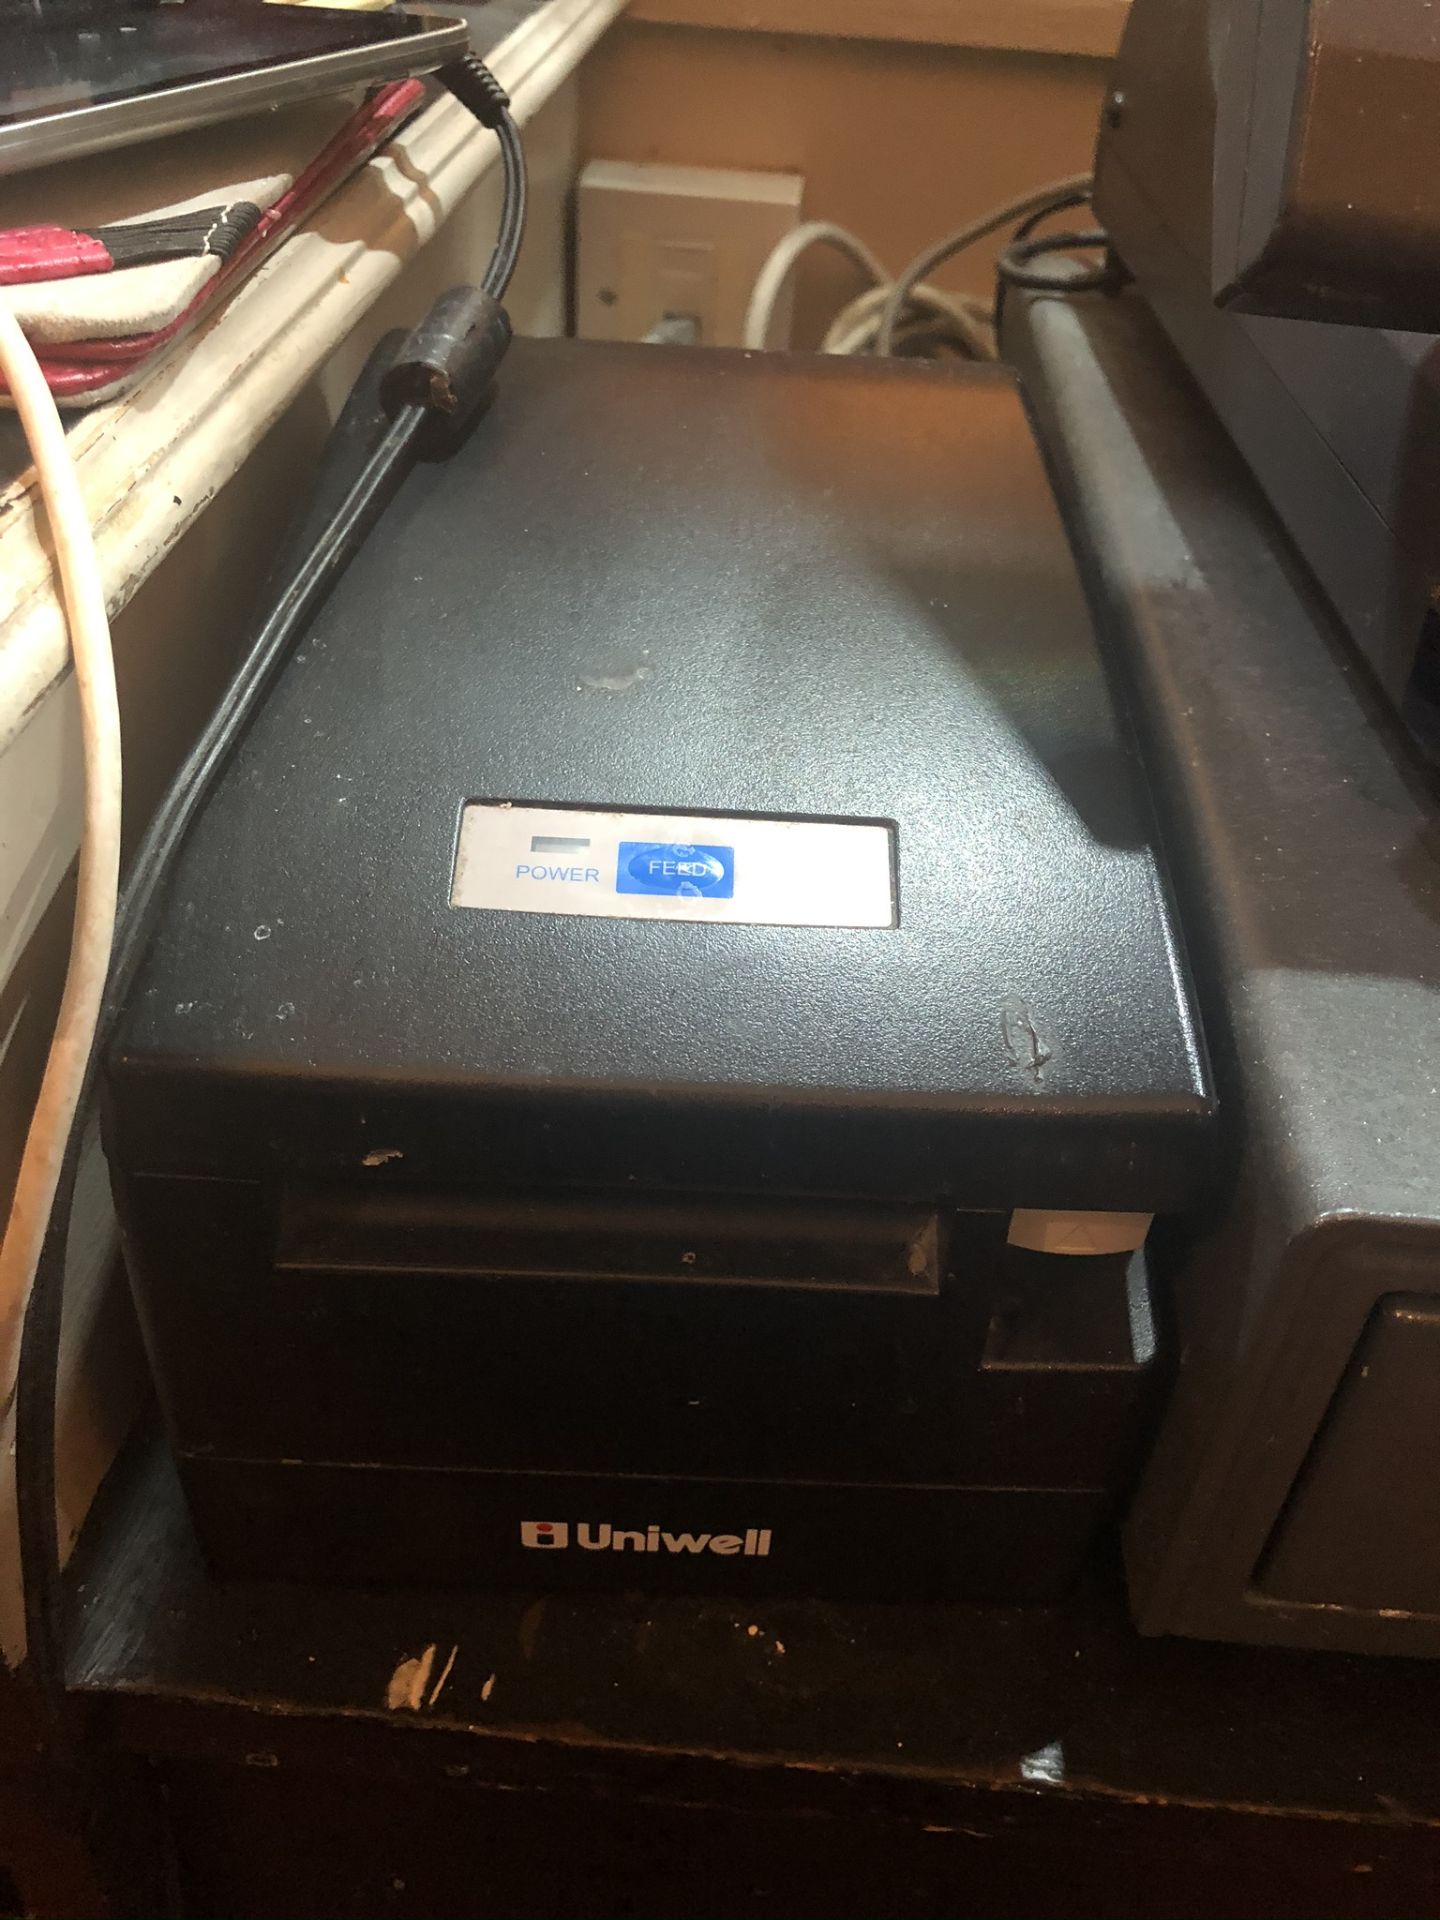 Uniwell EPOS System w/ Cash Drawer & Receipt Printer - Image 4 of 4